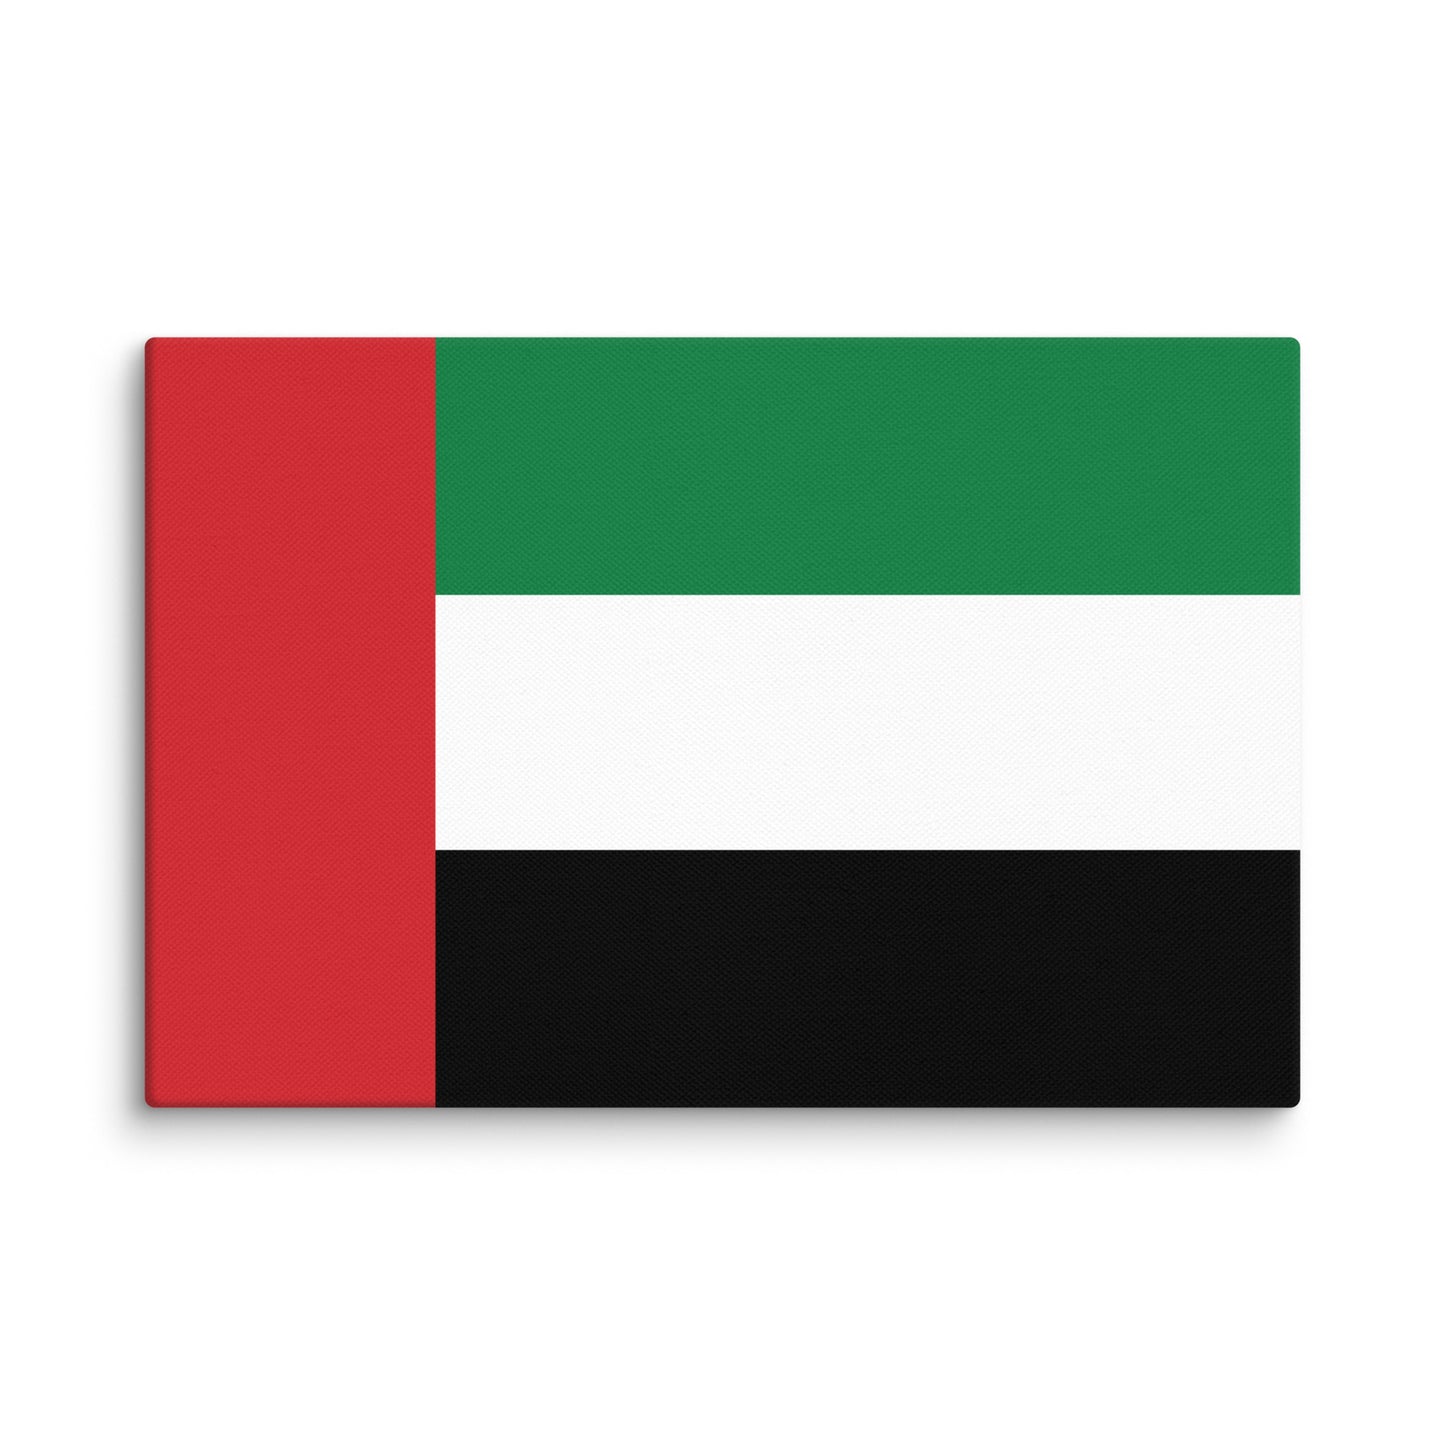 United Arab Emirates Flag _ علم الامارات العربية المتحدة _ size 18x12" canvas print